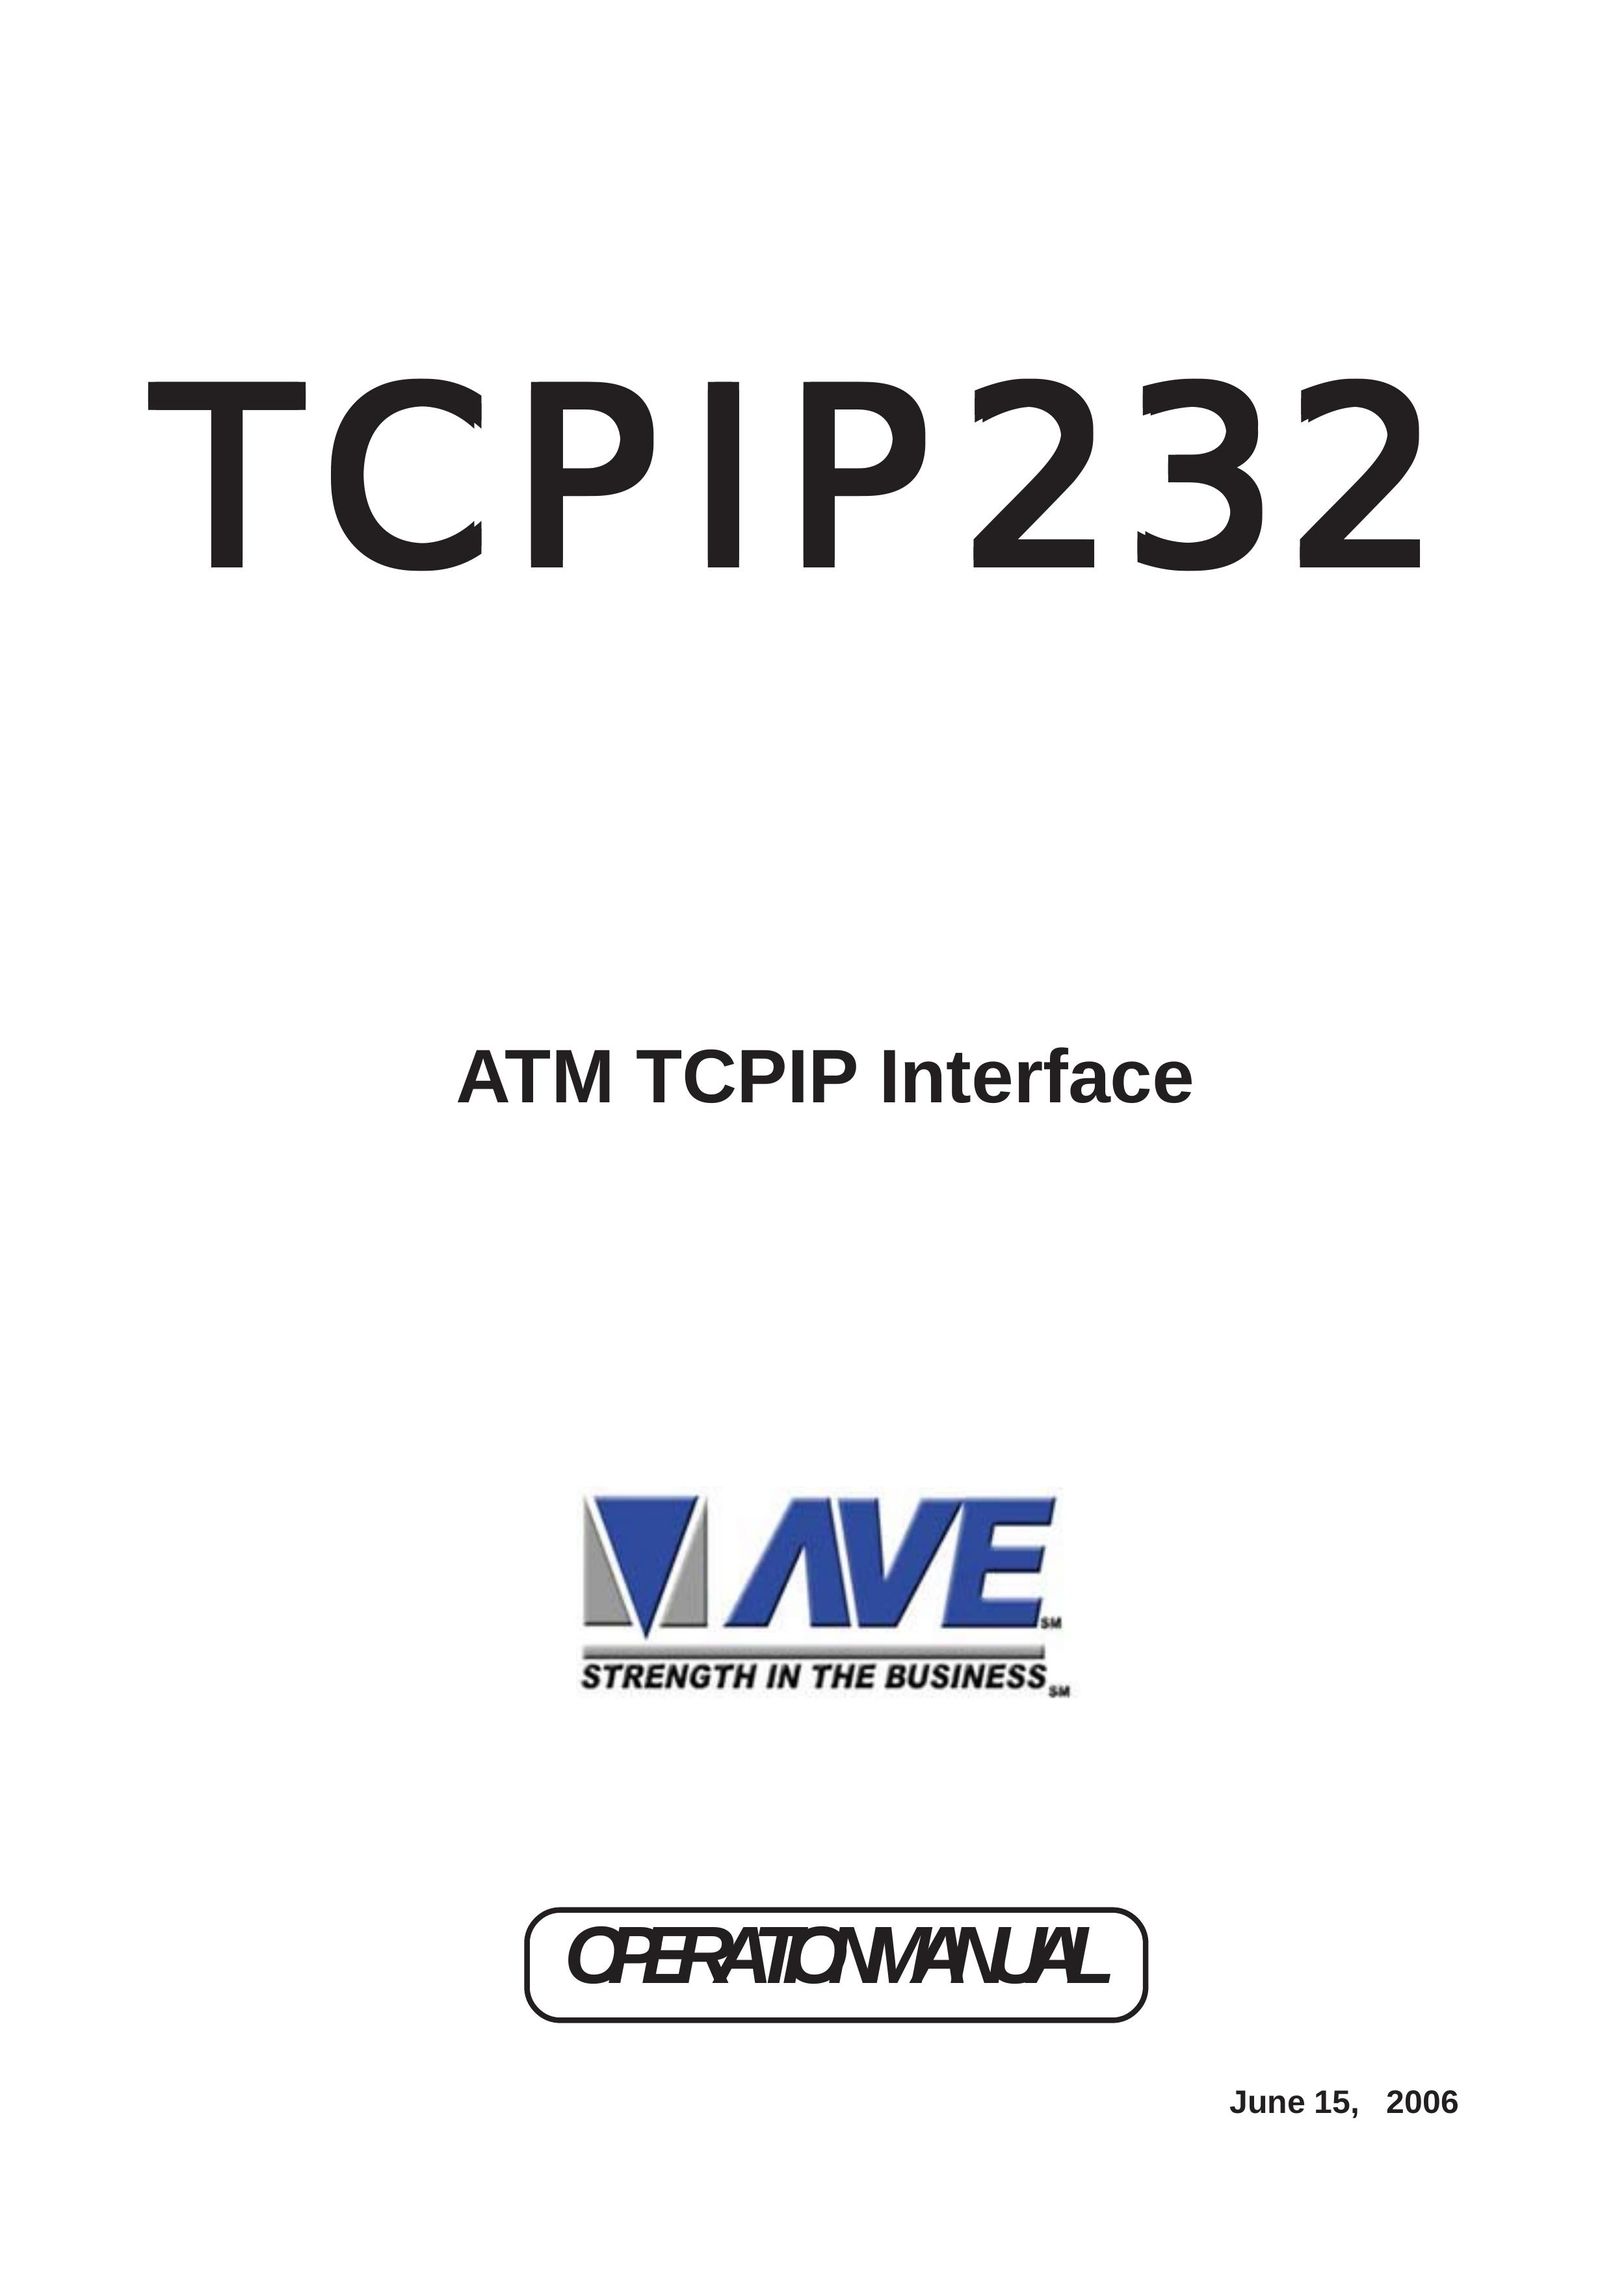 AVE TCPIP232 Network Card User Manual